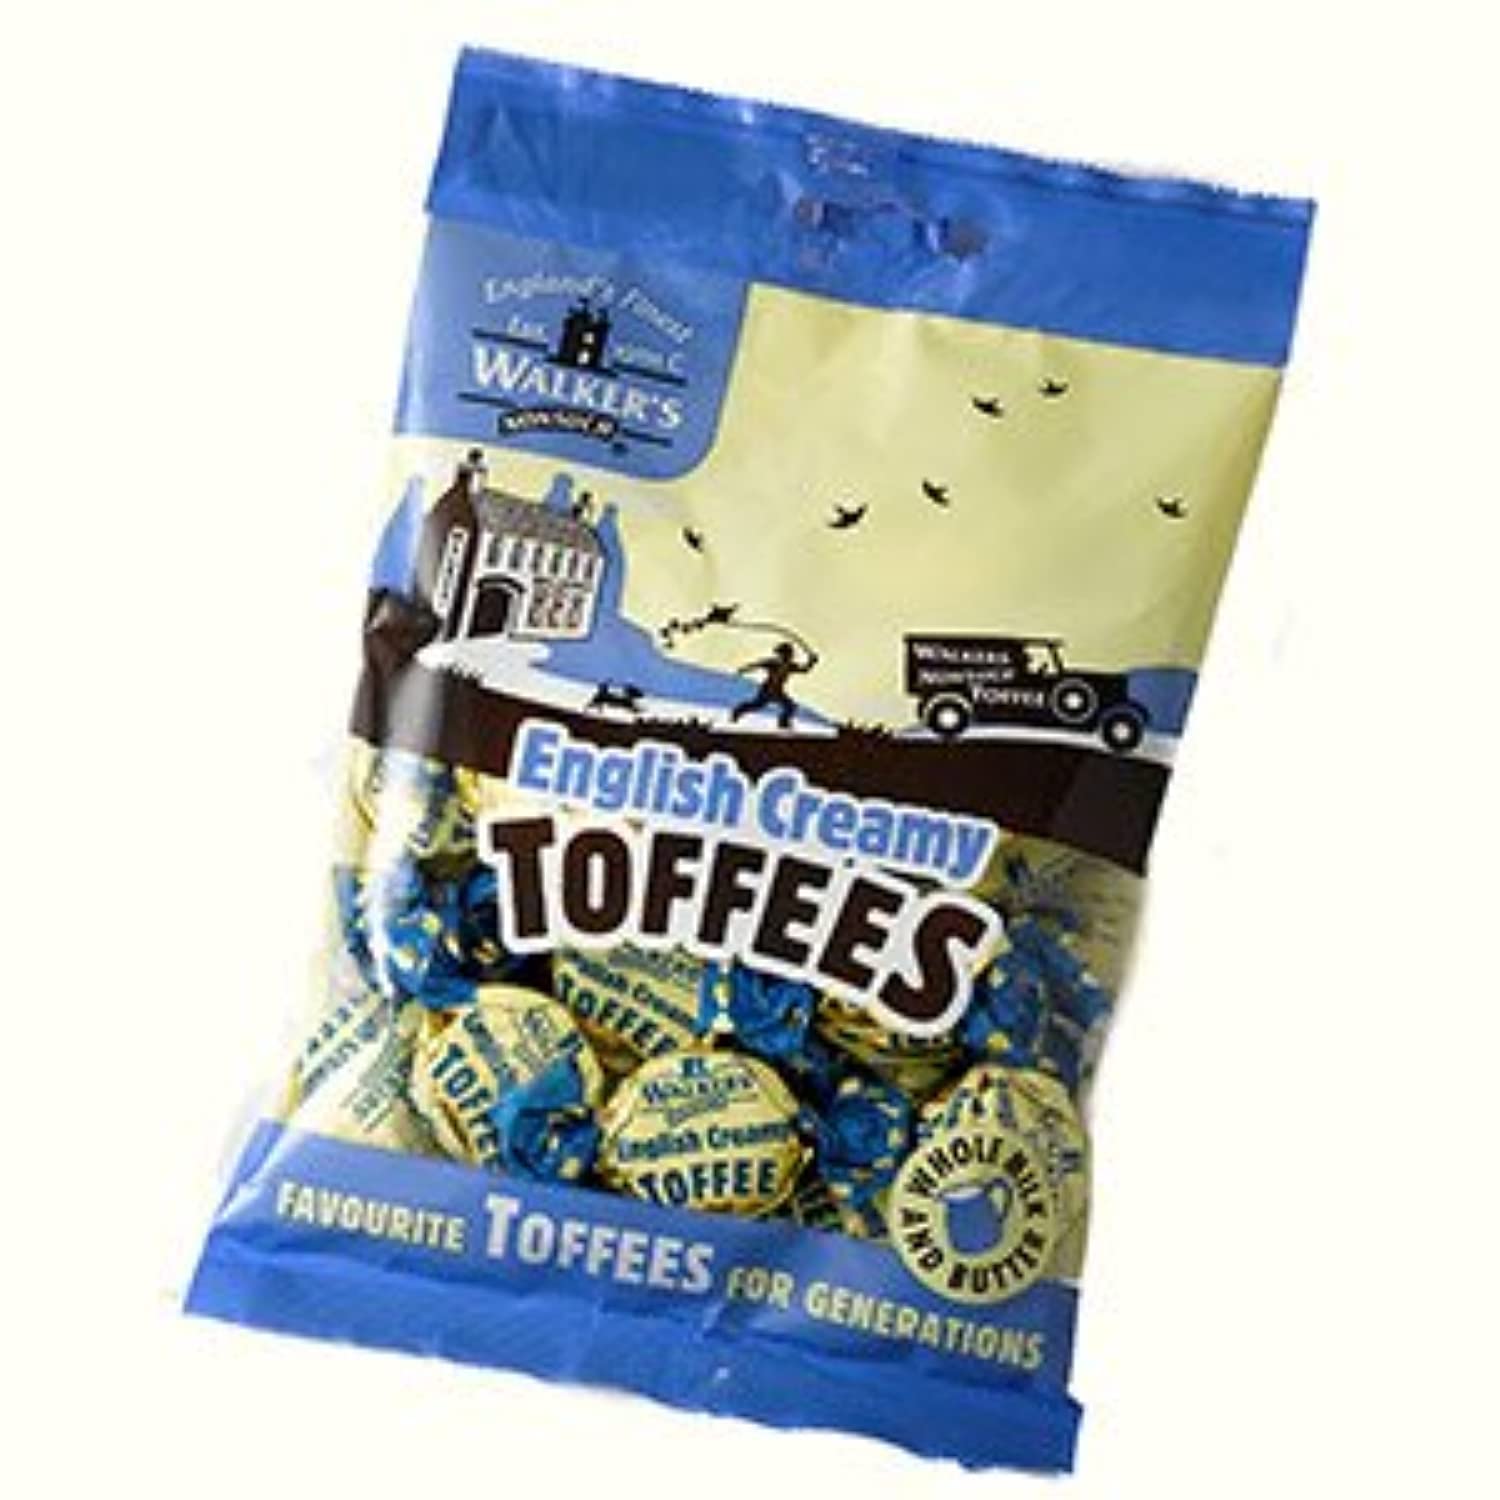 Walkers Toffee English Creamy Bag 150g (2.95/Unit)